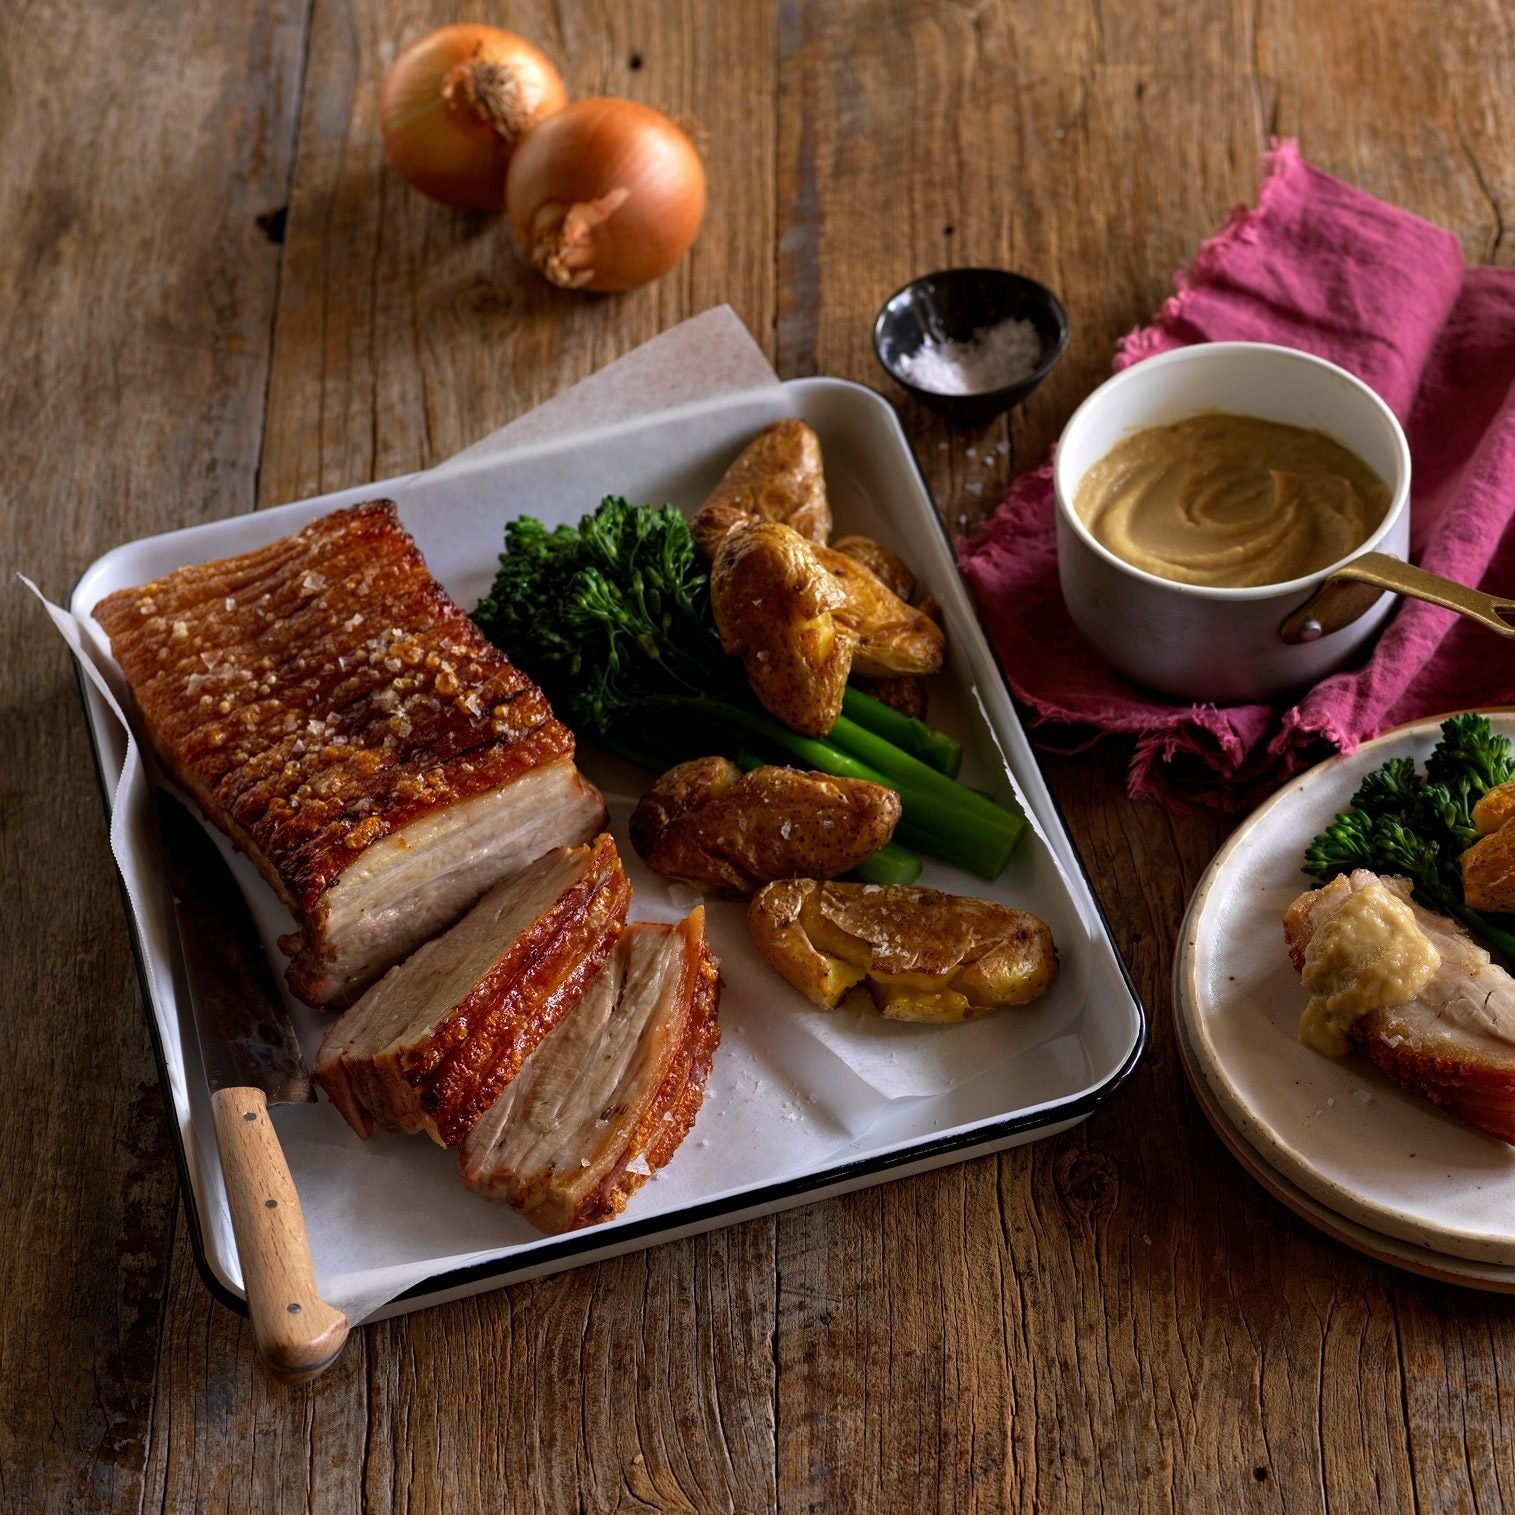 ROAST PORK DINNER WITH VEGGIES & CRANBERRY SAUCE